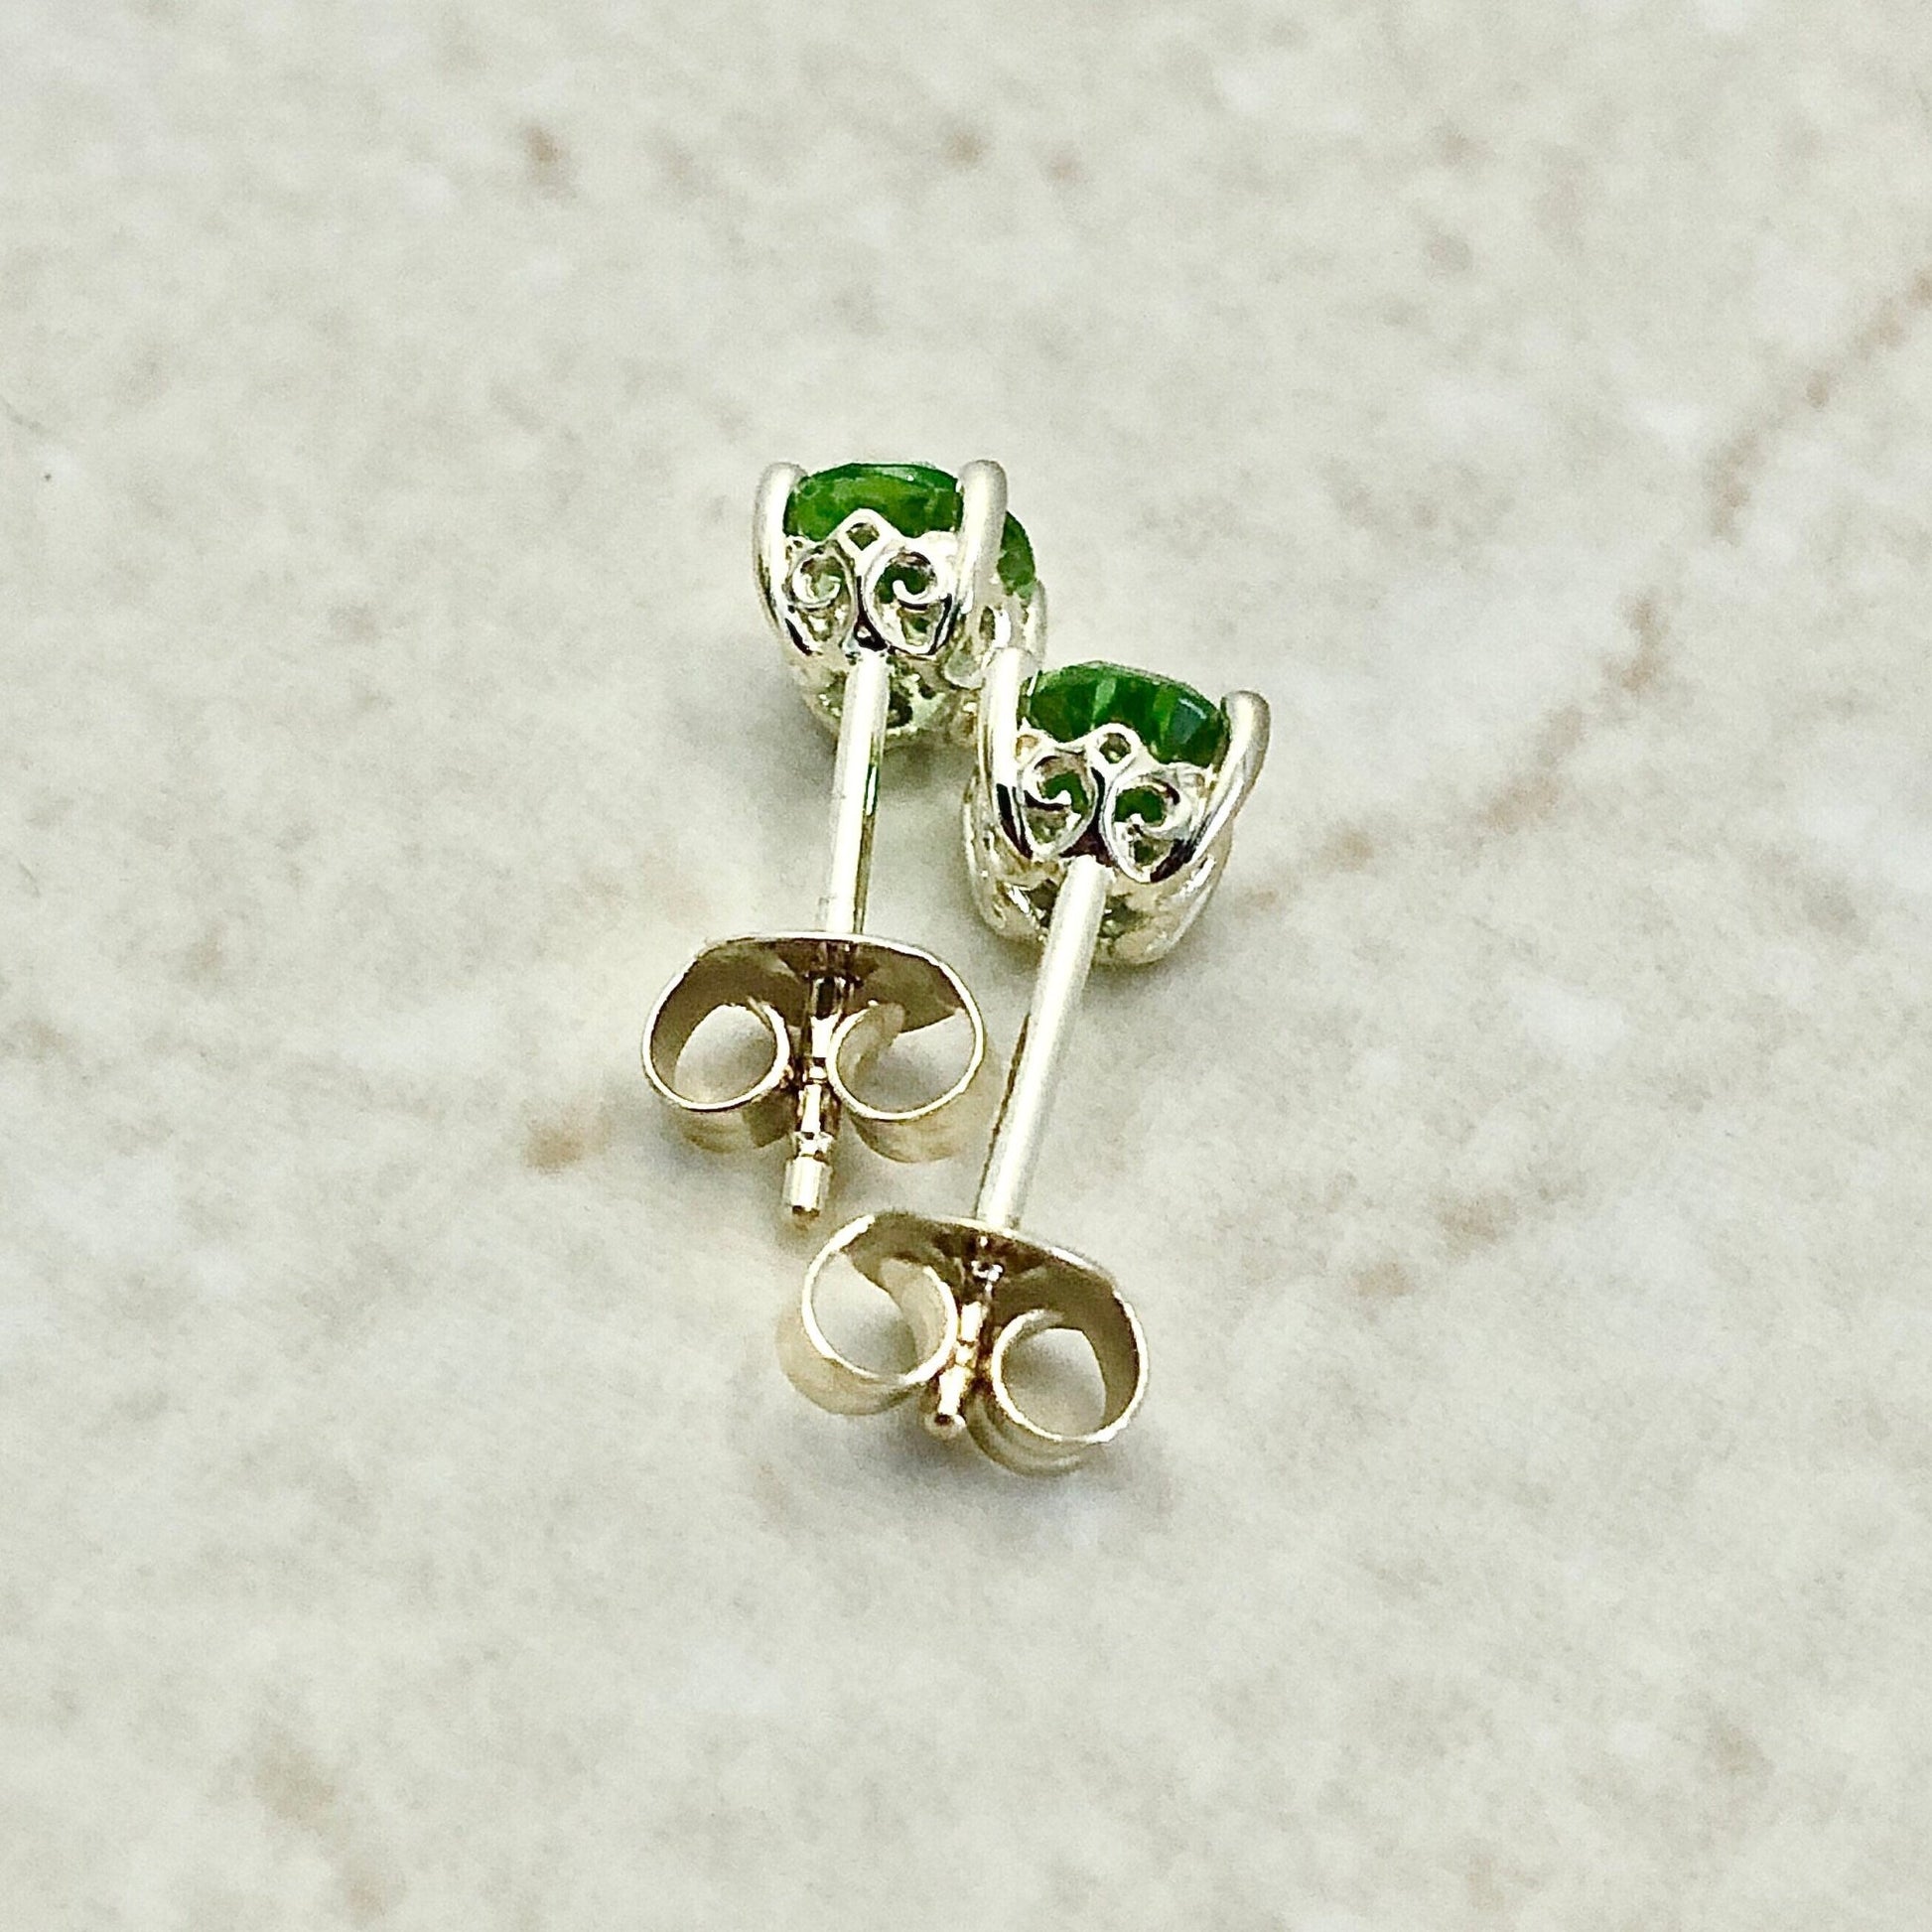 14K Oval Peridot Stud Earrings - Yellow Gold Peridot Earrings - August Birthstone - Genuine Gemstone - Birthday Gift - Best Gift For Her